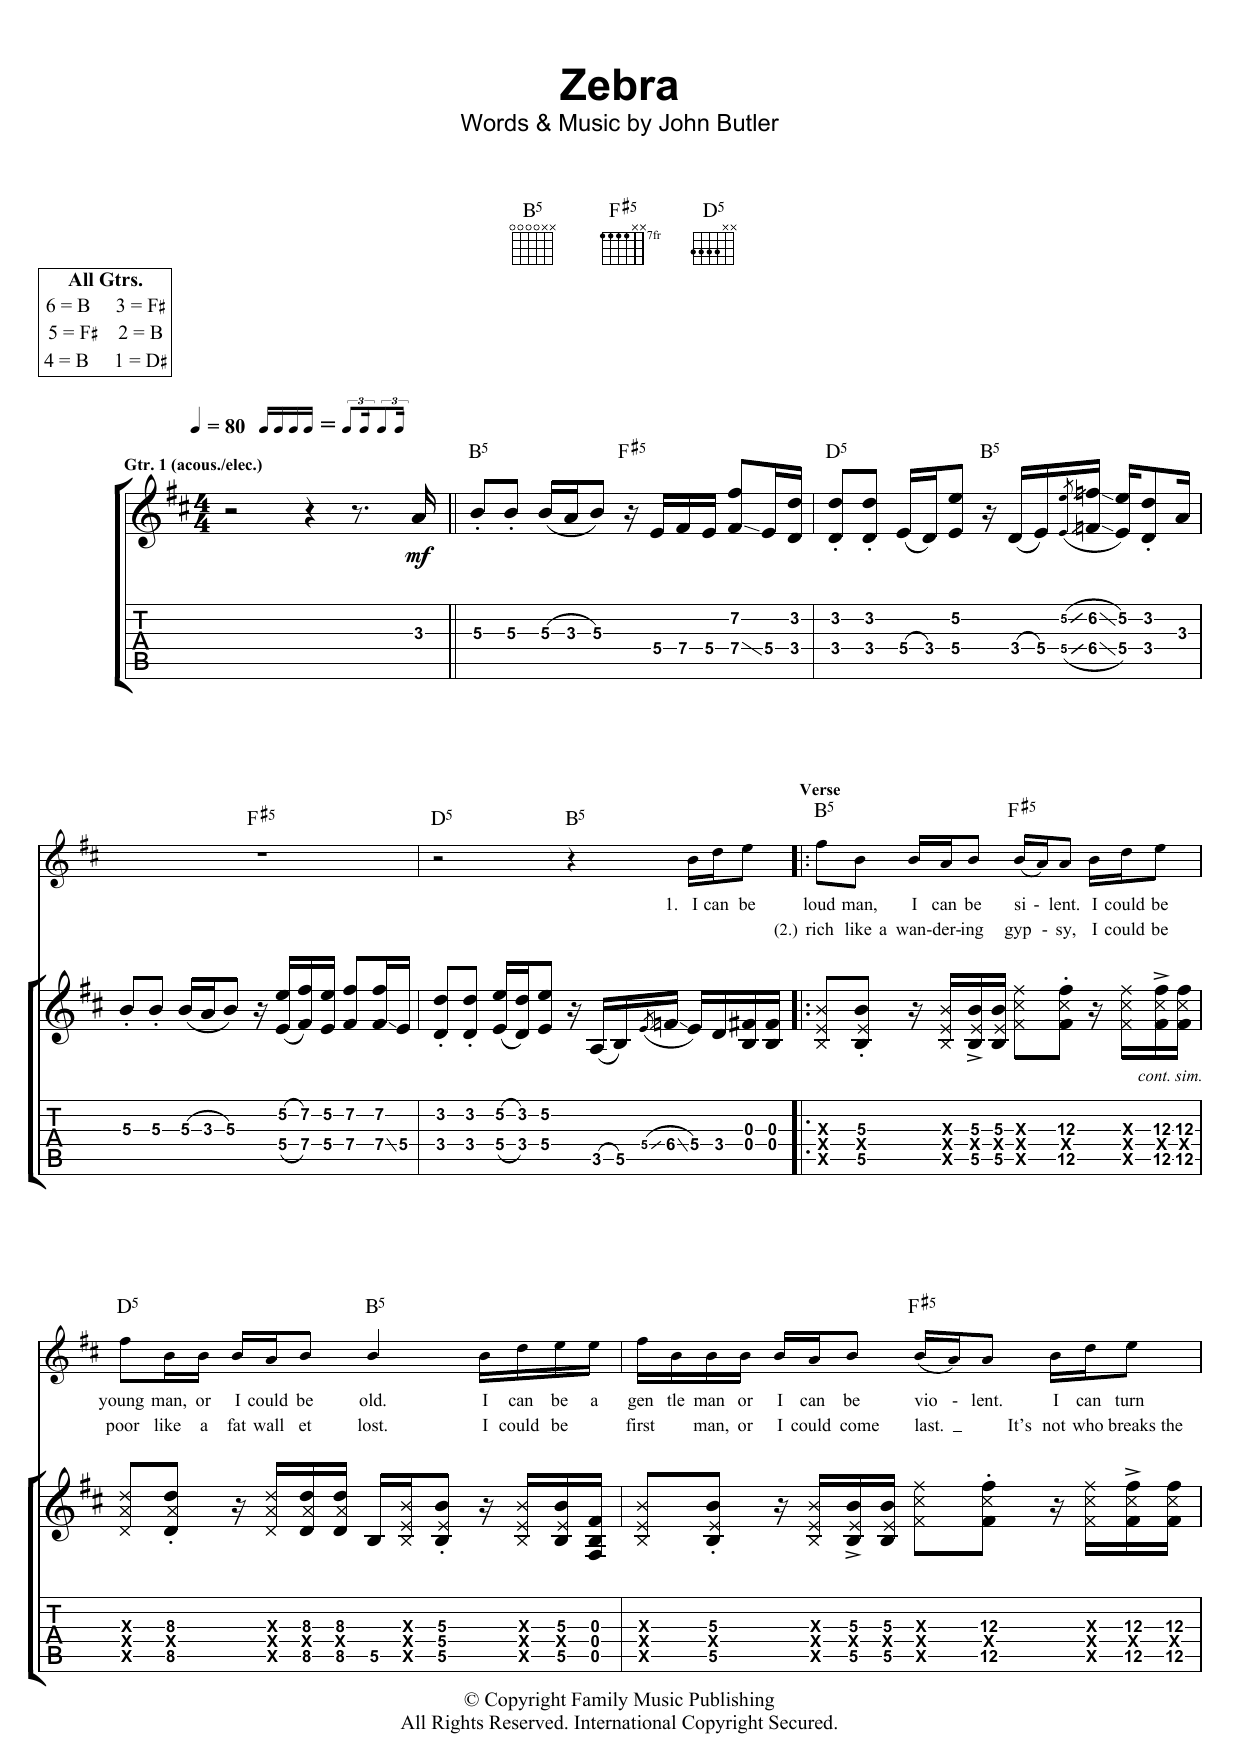 John Butler Zebra Sheet Music Notes & Chords for Guitar Tab - Download or Print PDF